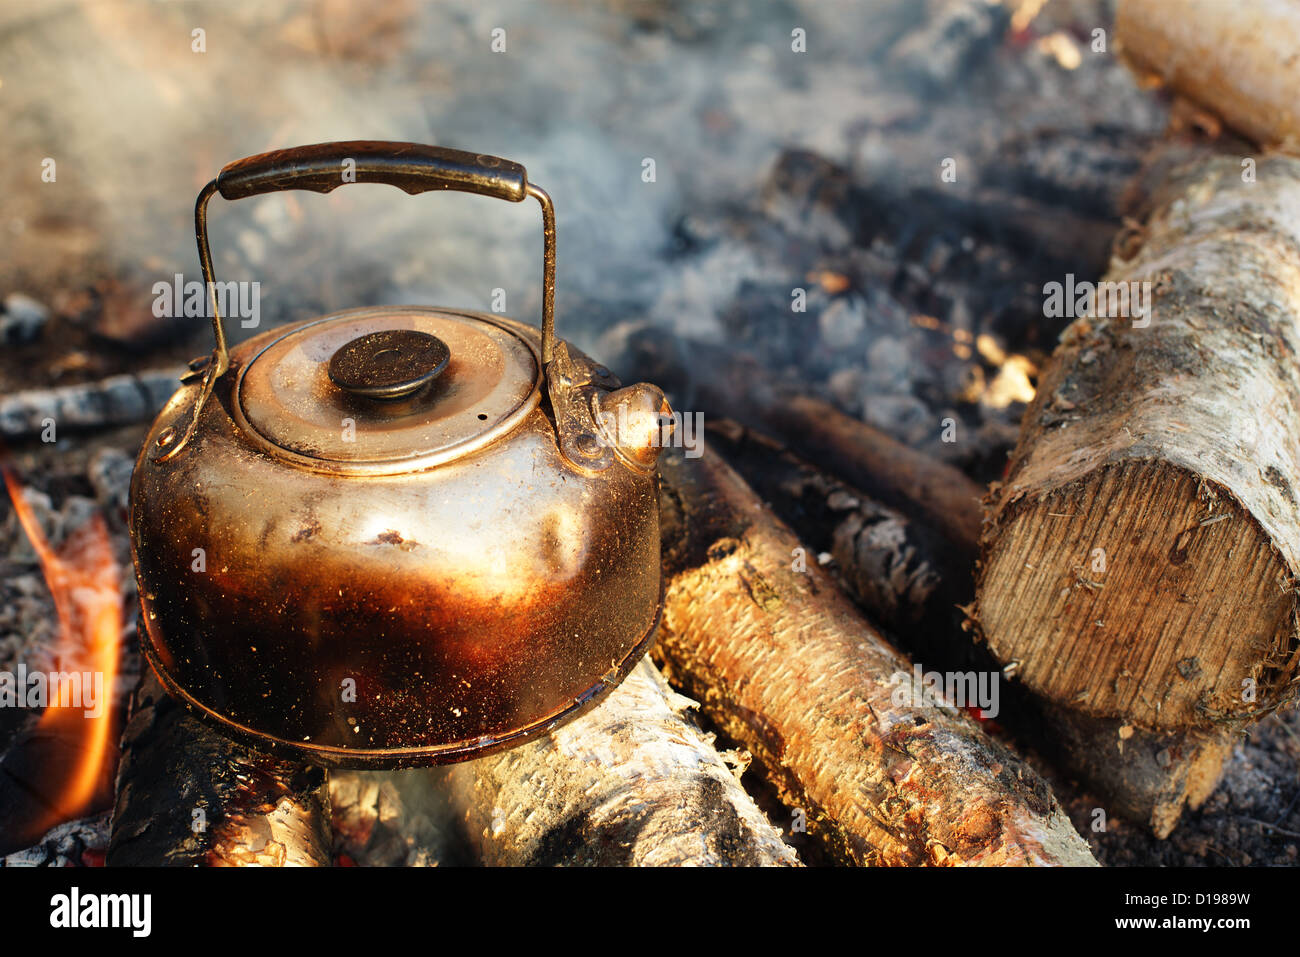 https://c8.alamy.com/comp/D1989W/sooty-teapot-on-camping-bonfire-D1989W.jpg